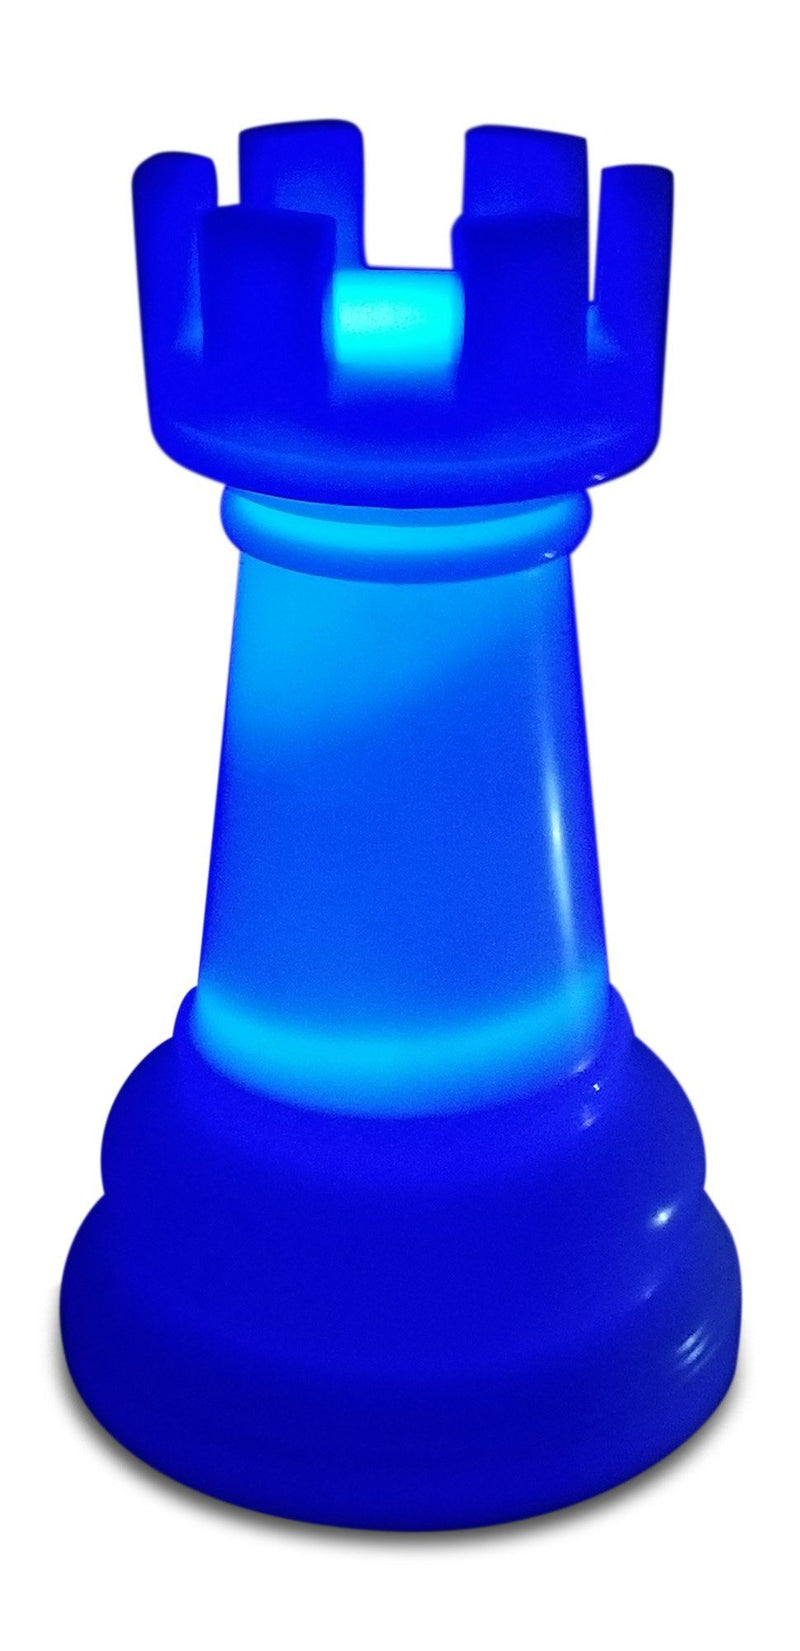 MegaChess 21 Inch Perfect Rook Light-Up Giant Chess Piece - Blue | Default Title | MegaChess.com